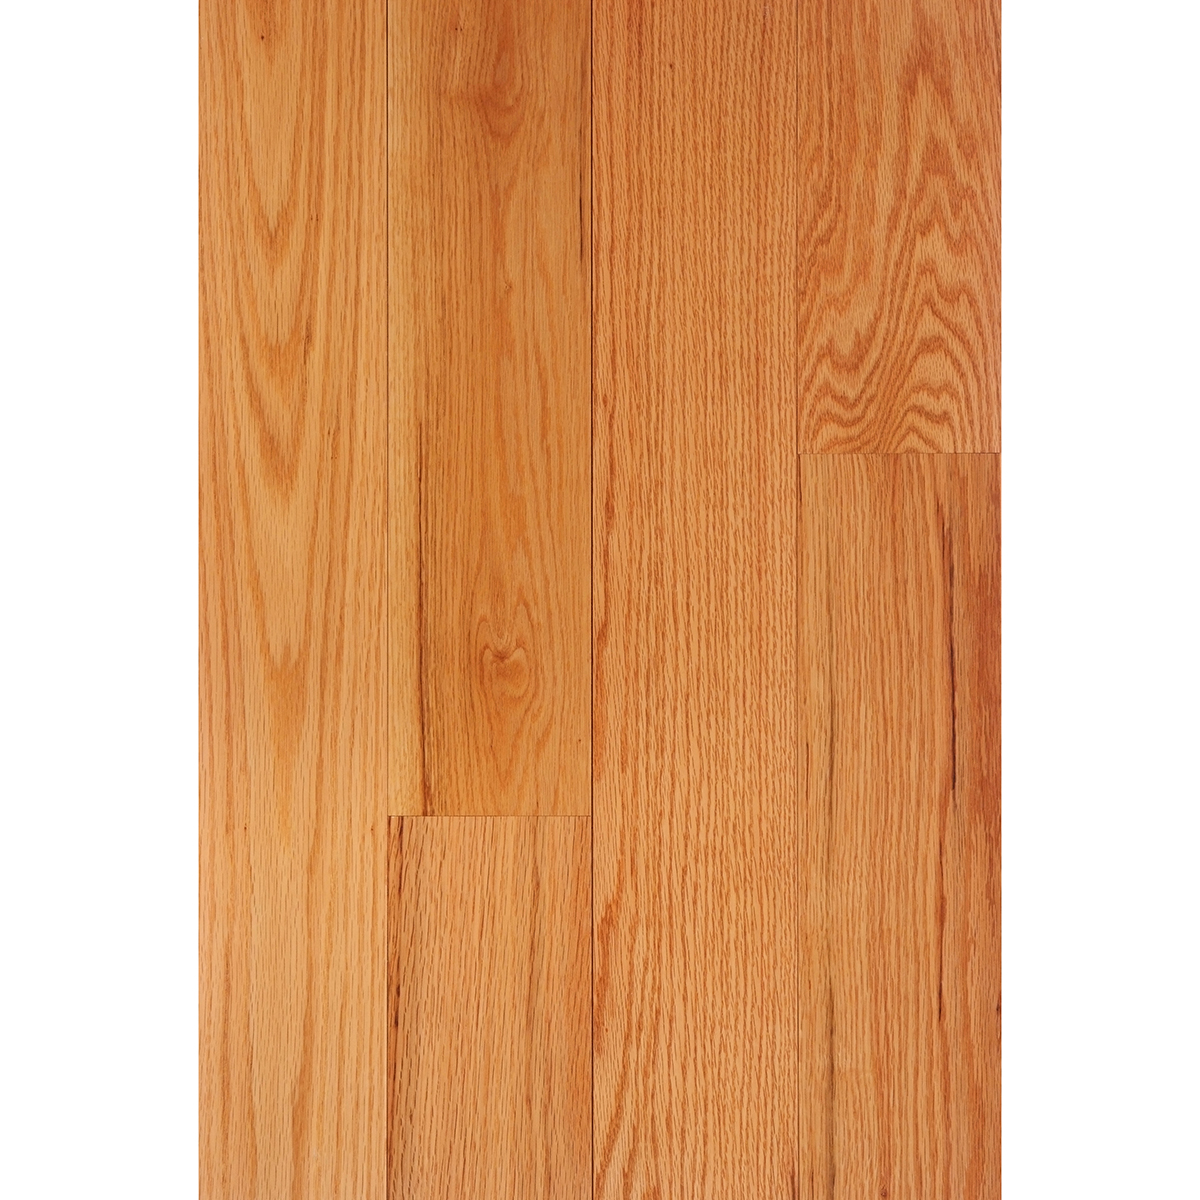 Red Oak Select Grade Flooring, Select Oak Hardwood Flooring